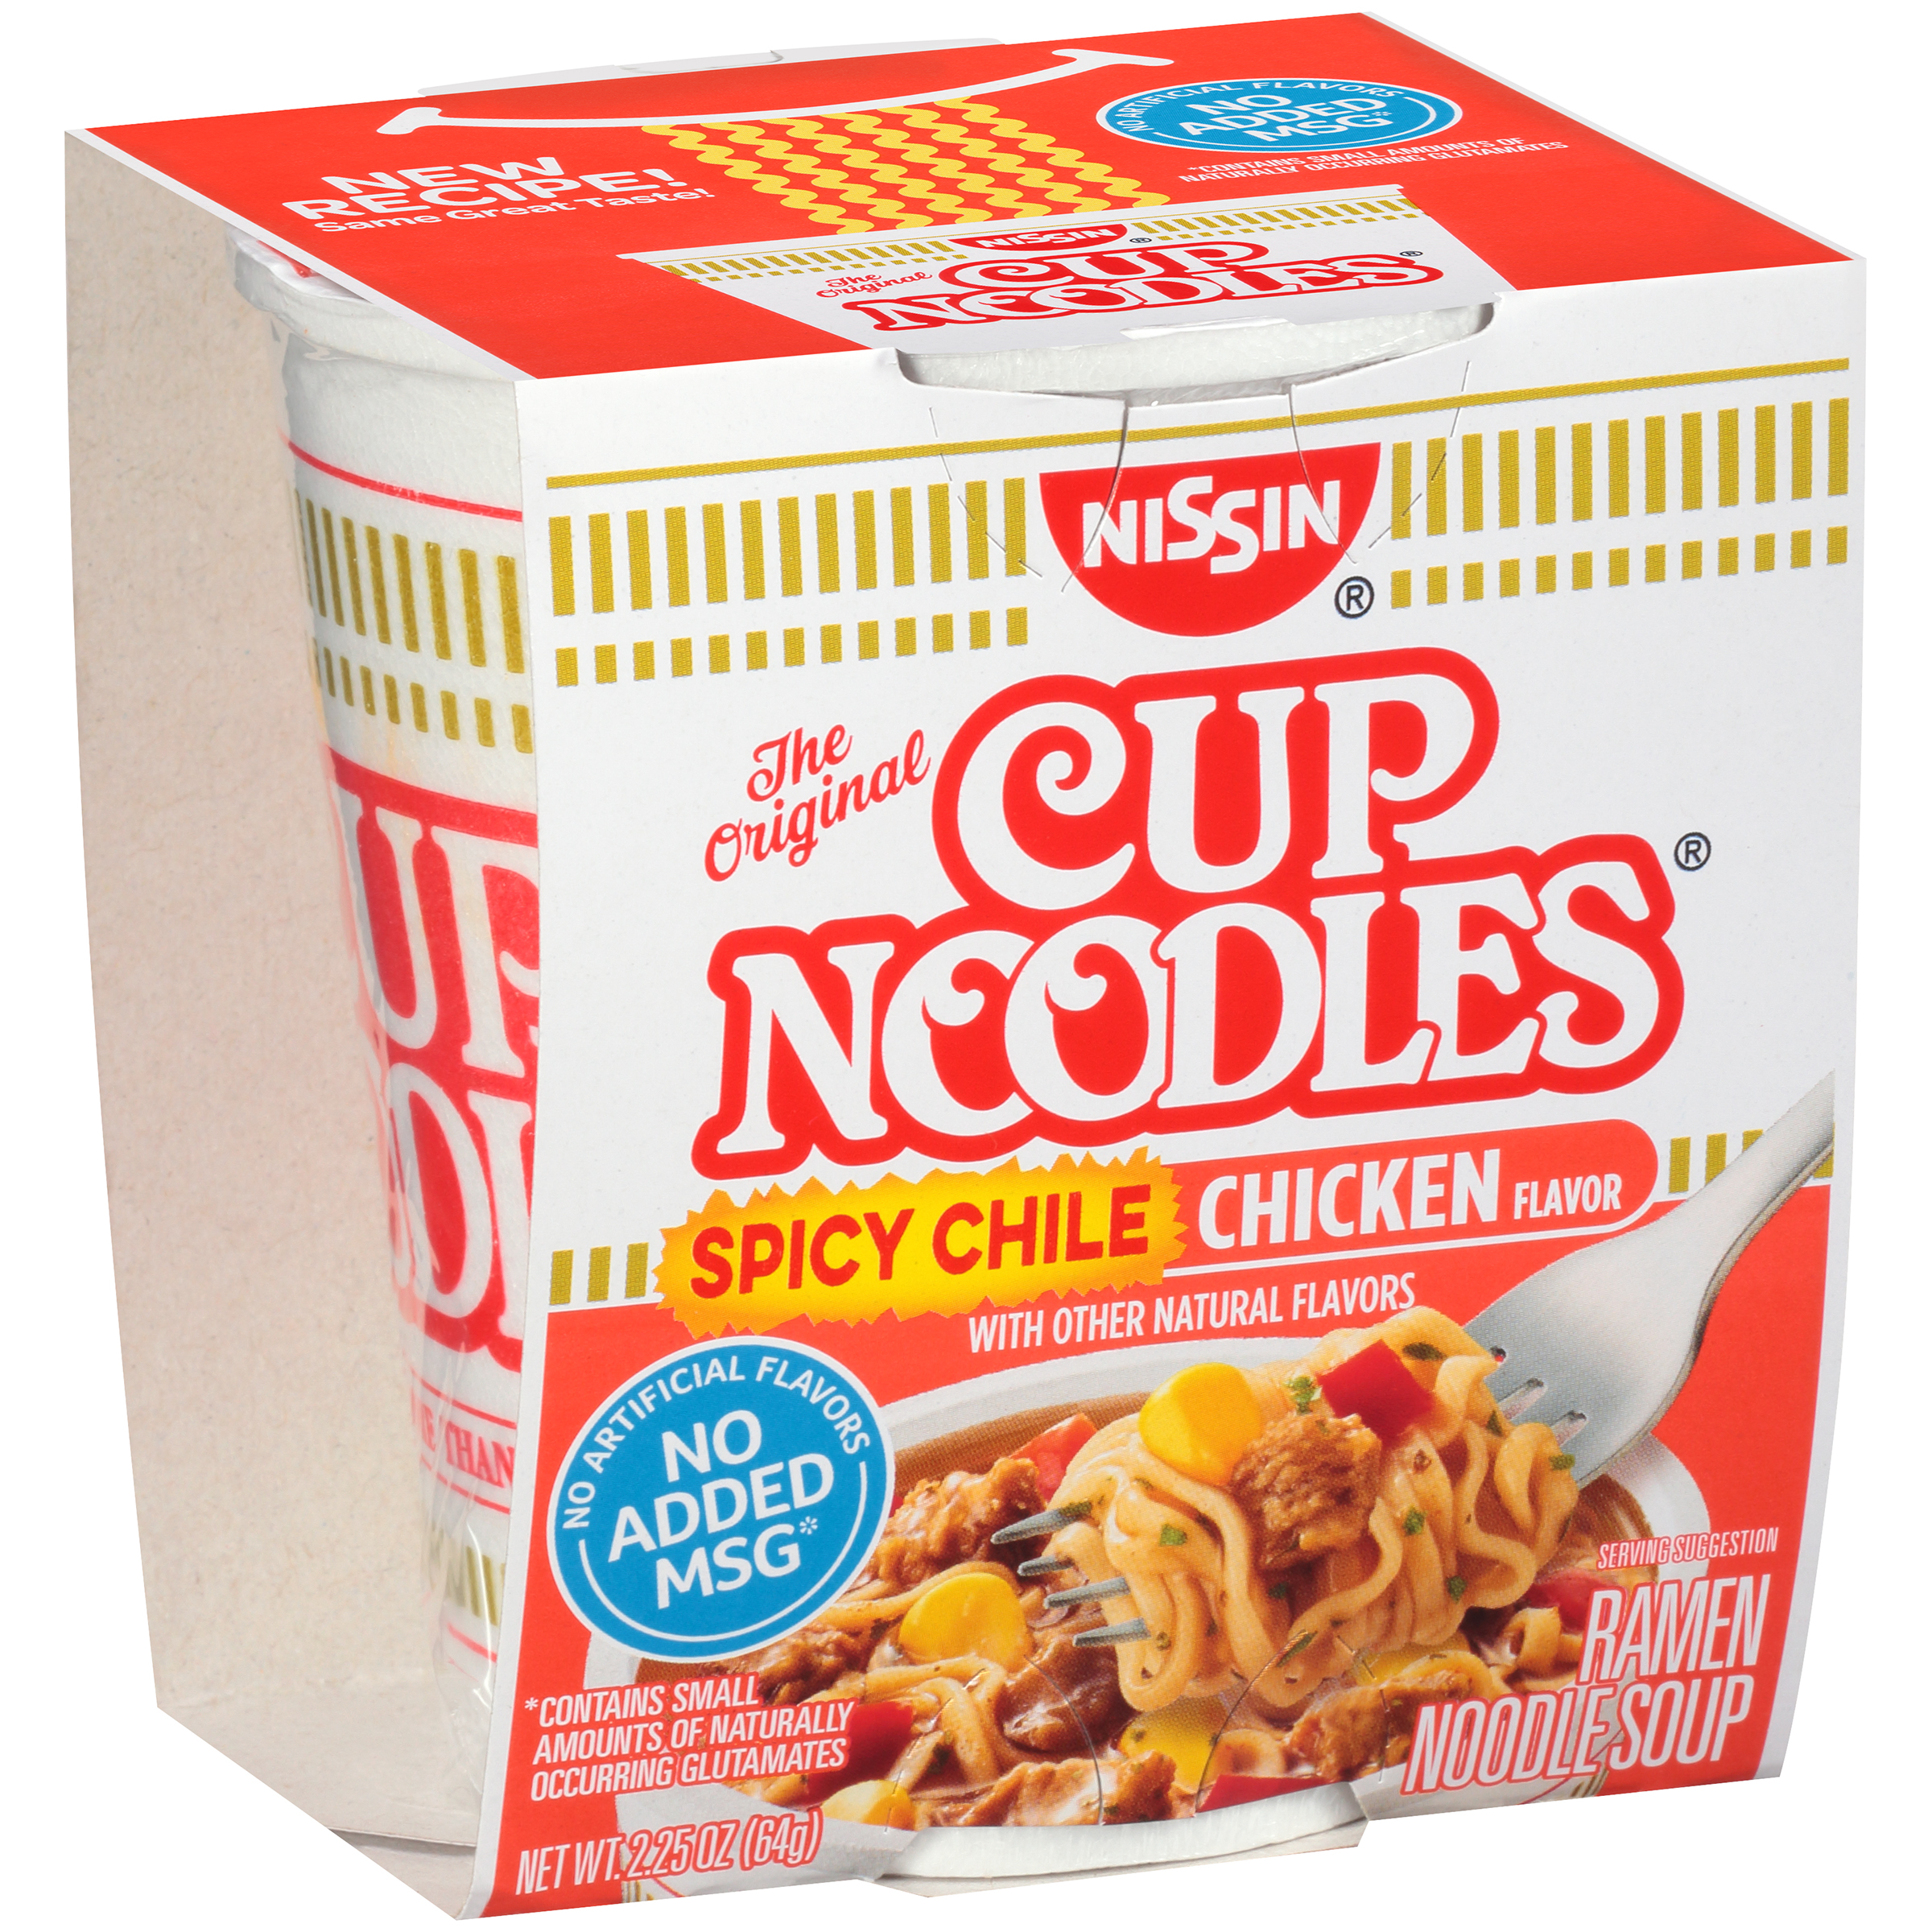 Nissin® The Original Cup Noodles® Spicy Chile Chicken Flavor Ramen